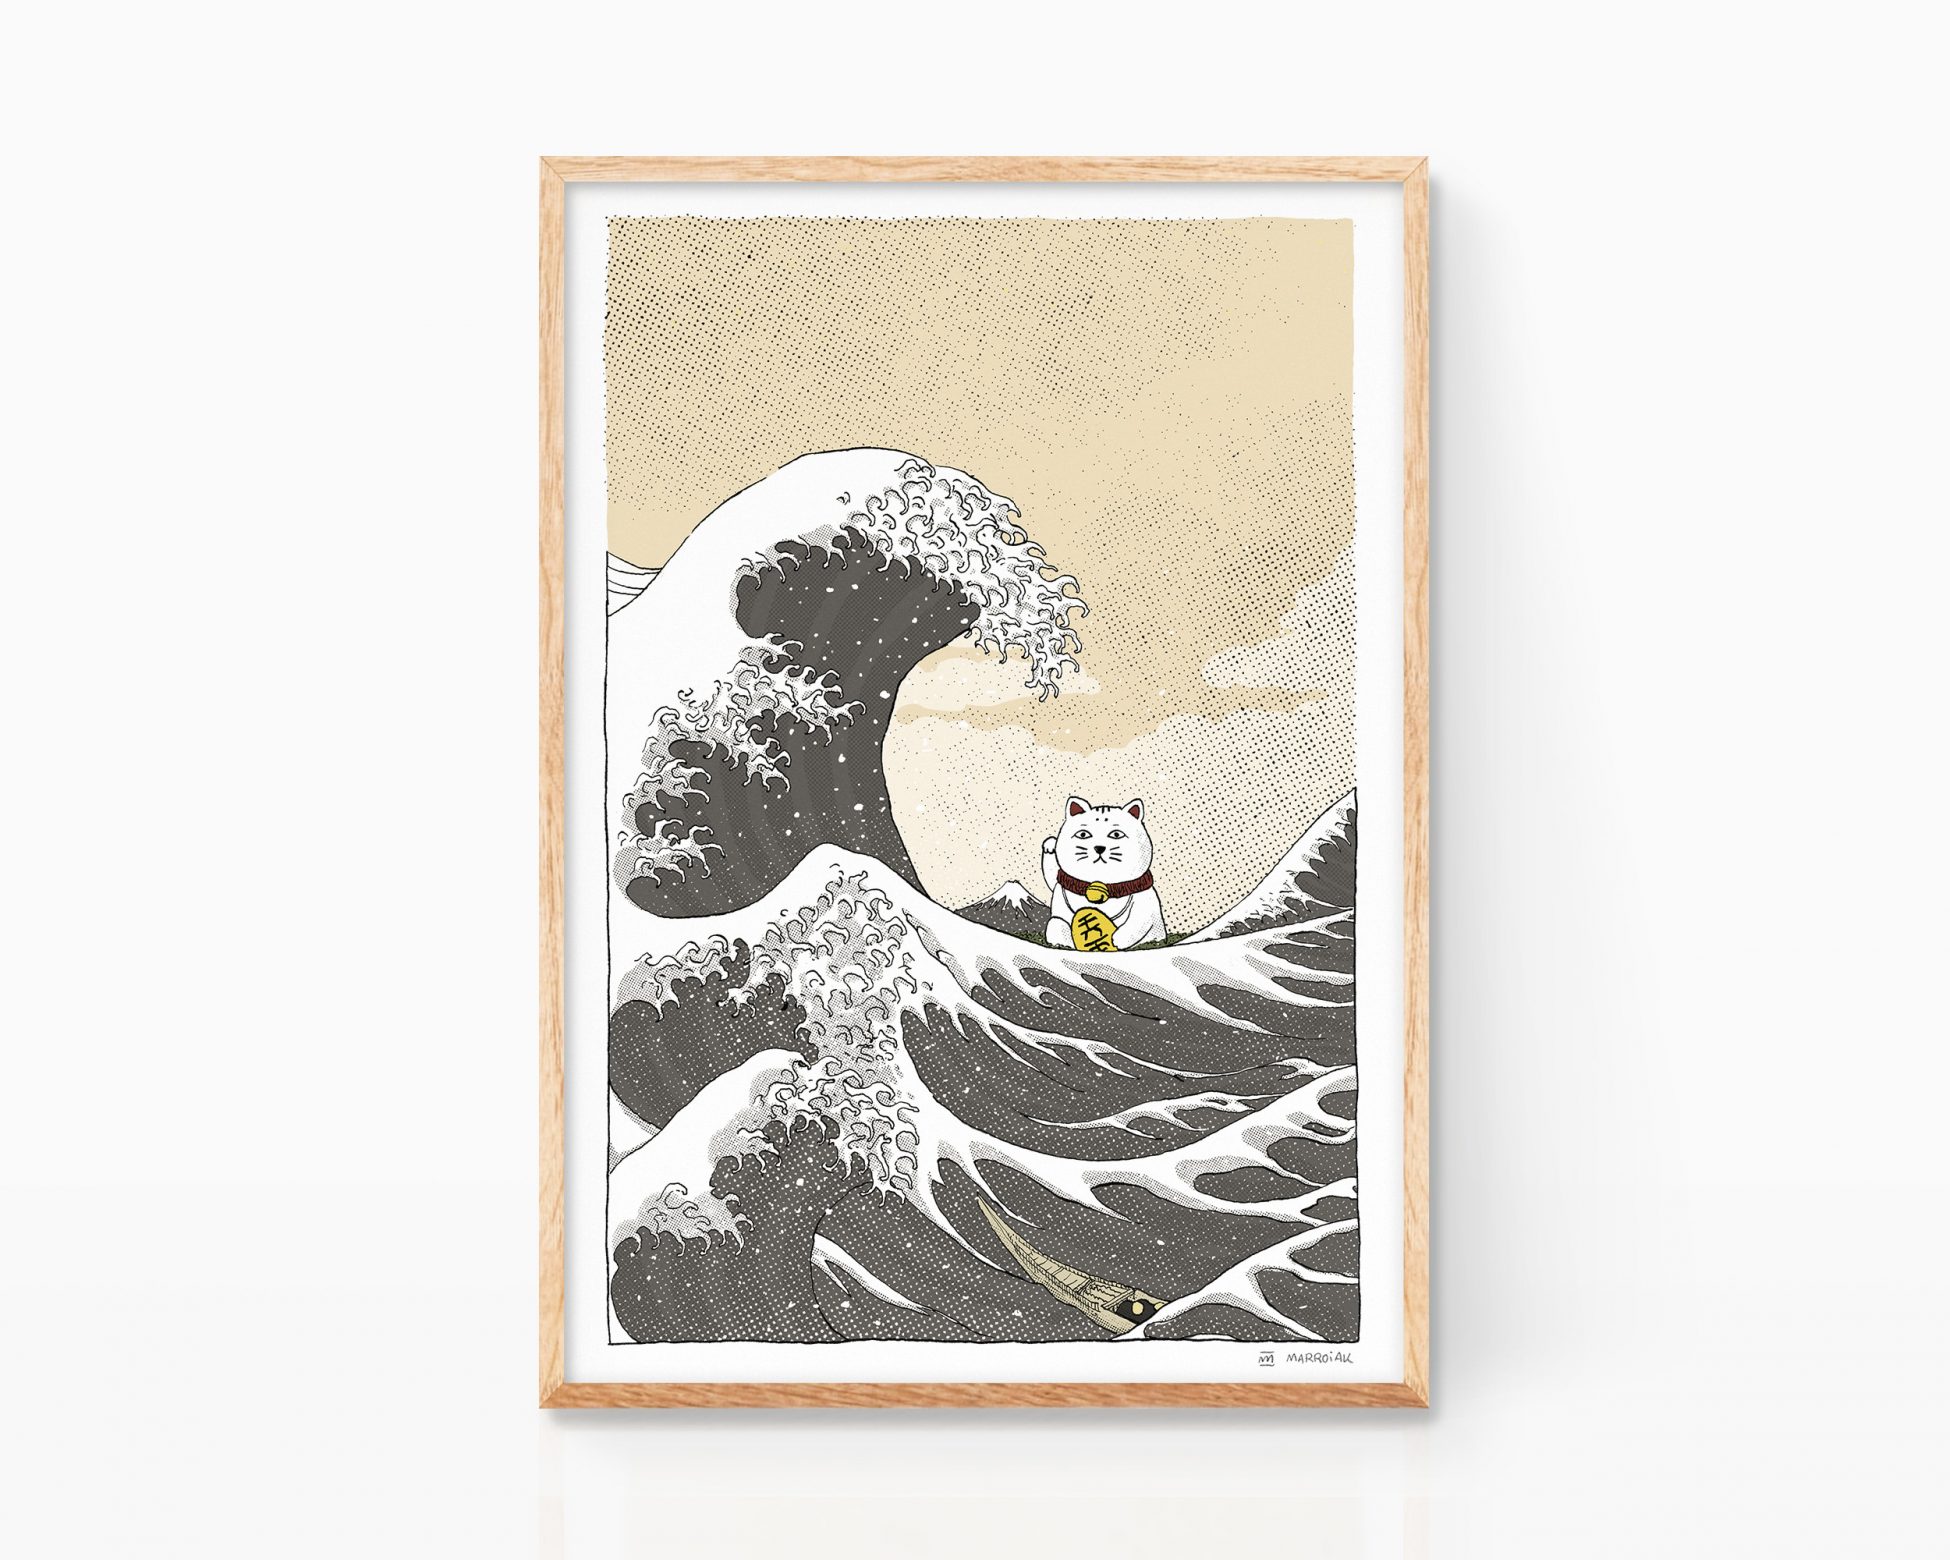 Cuadro decorativo para enmarcar con un dibujo (Print) de estilo ukiyo-e con la Gran ola de Kanagawa de Katsushika Hokusai y añadiendo el gato japonés de la suerte (Maneki Neko). Arte impreso de estampas japonesas contemporáneas.